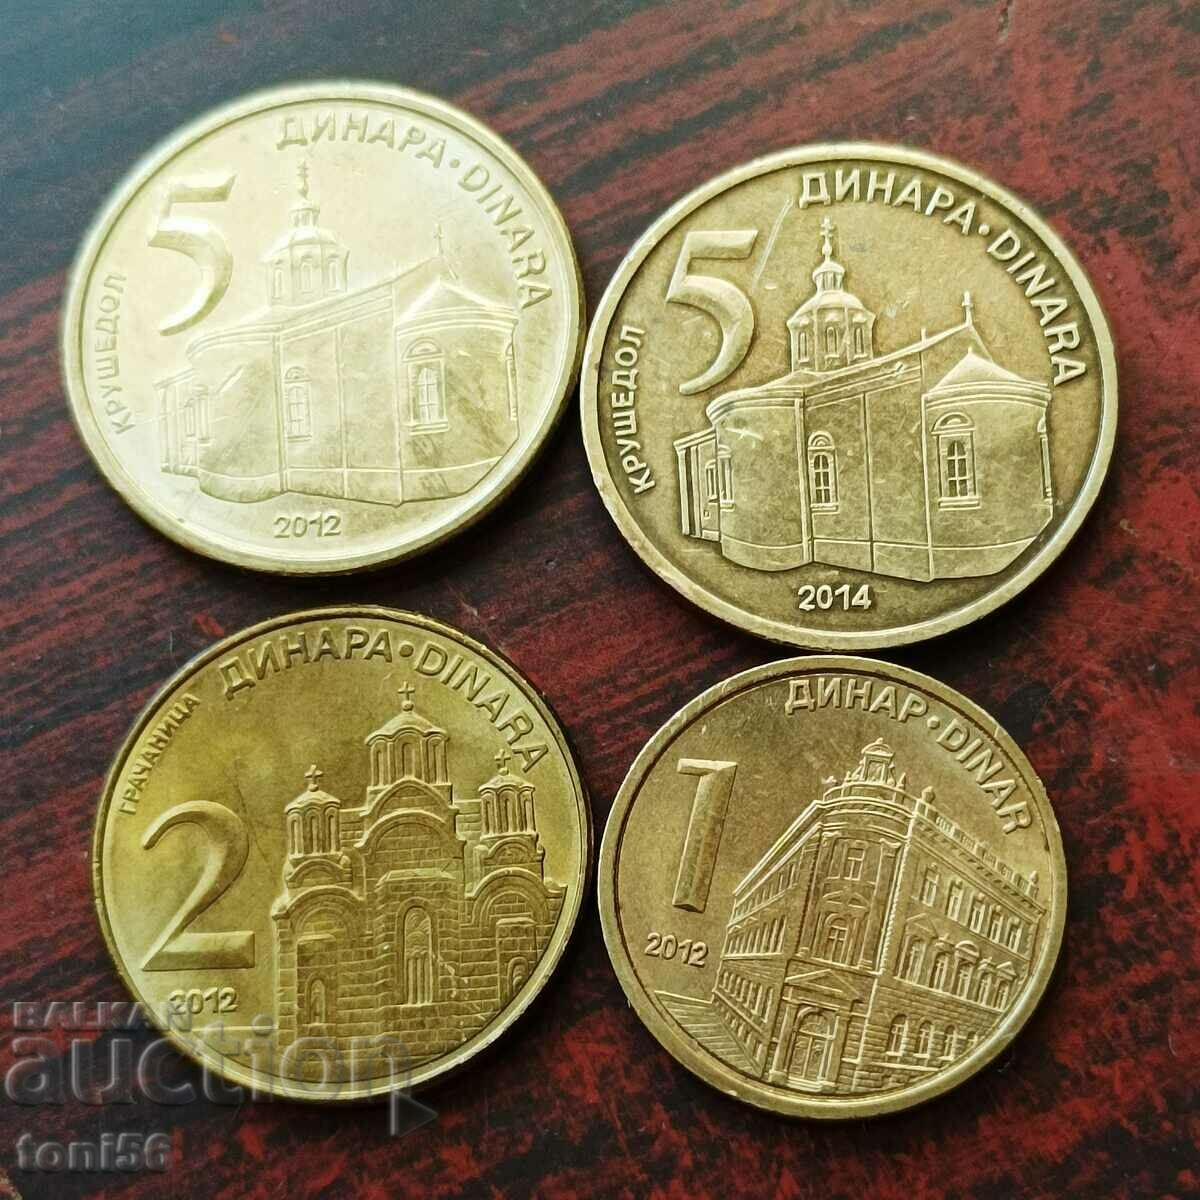 Serbia set 1, 2, 5, and 5 dinars 2012/14 - see description